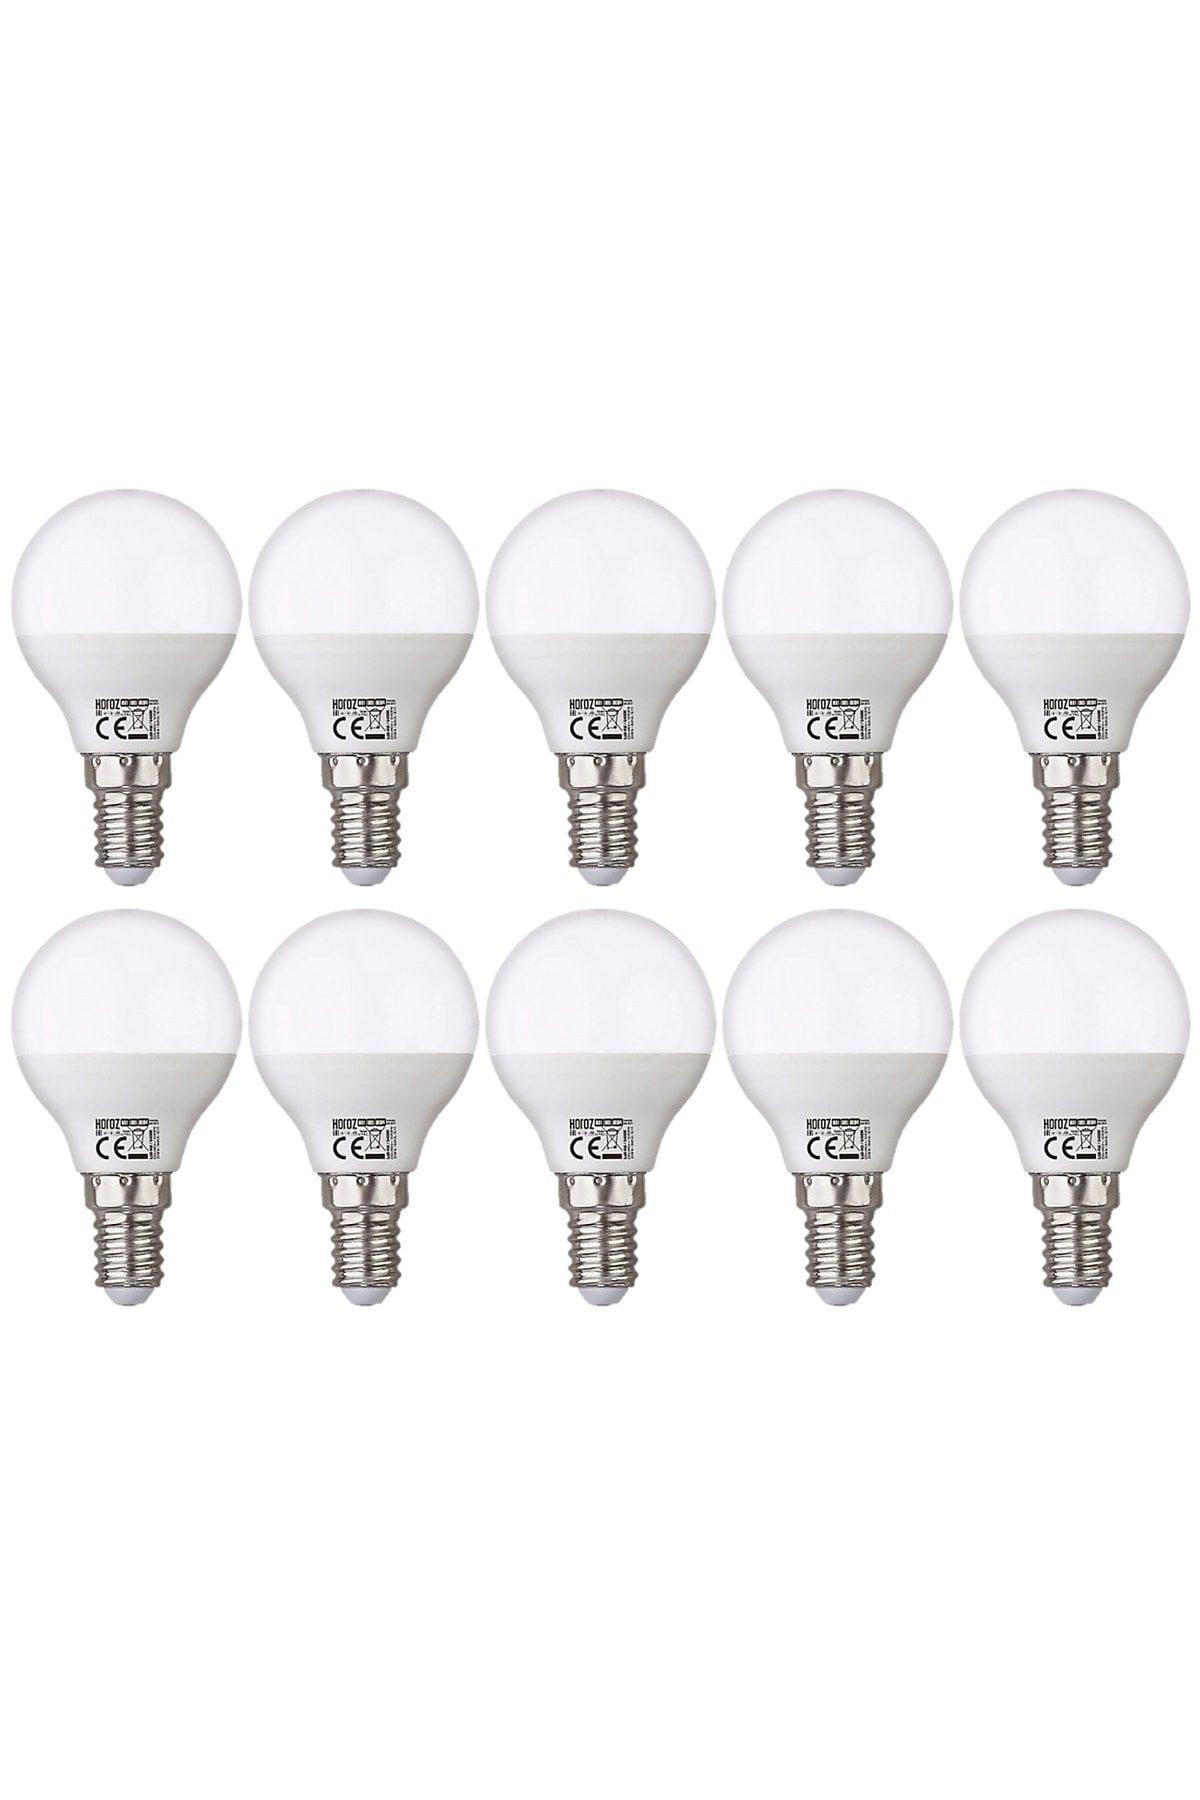 Horoz Elektrik 20 Pieces 5w-40w Top Led Bulbs